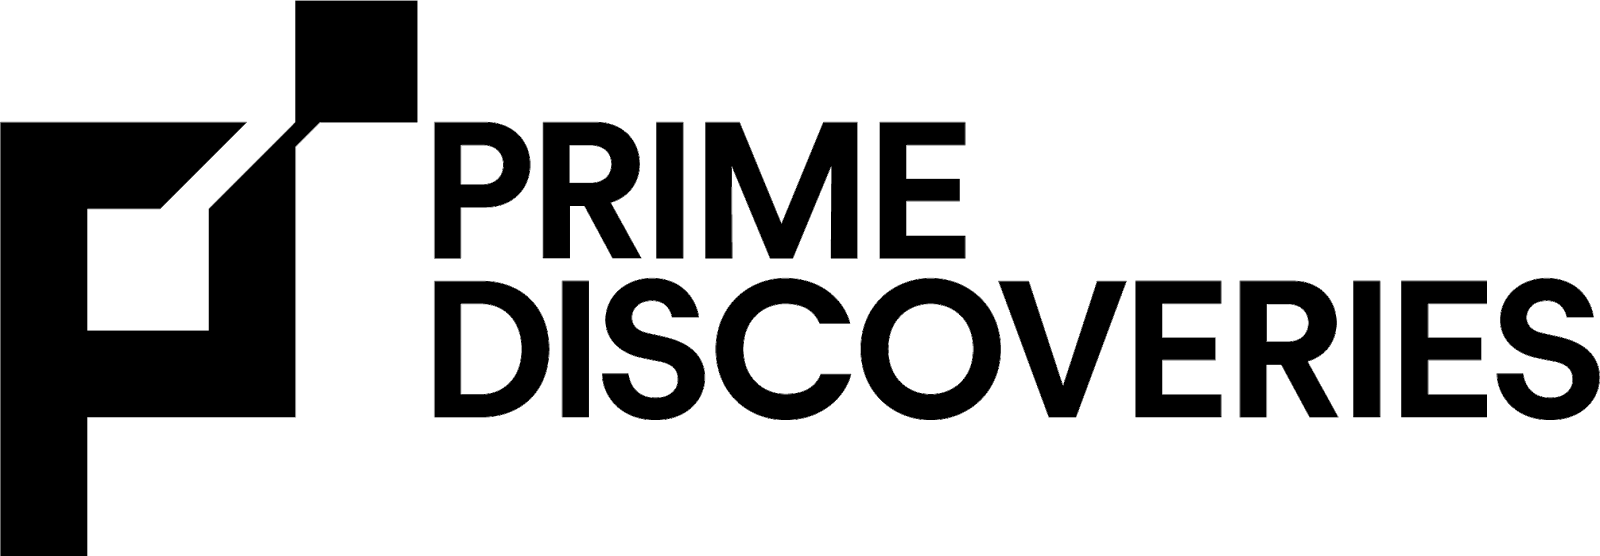 Prime Discoveries logo